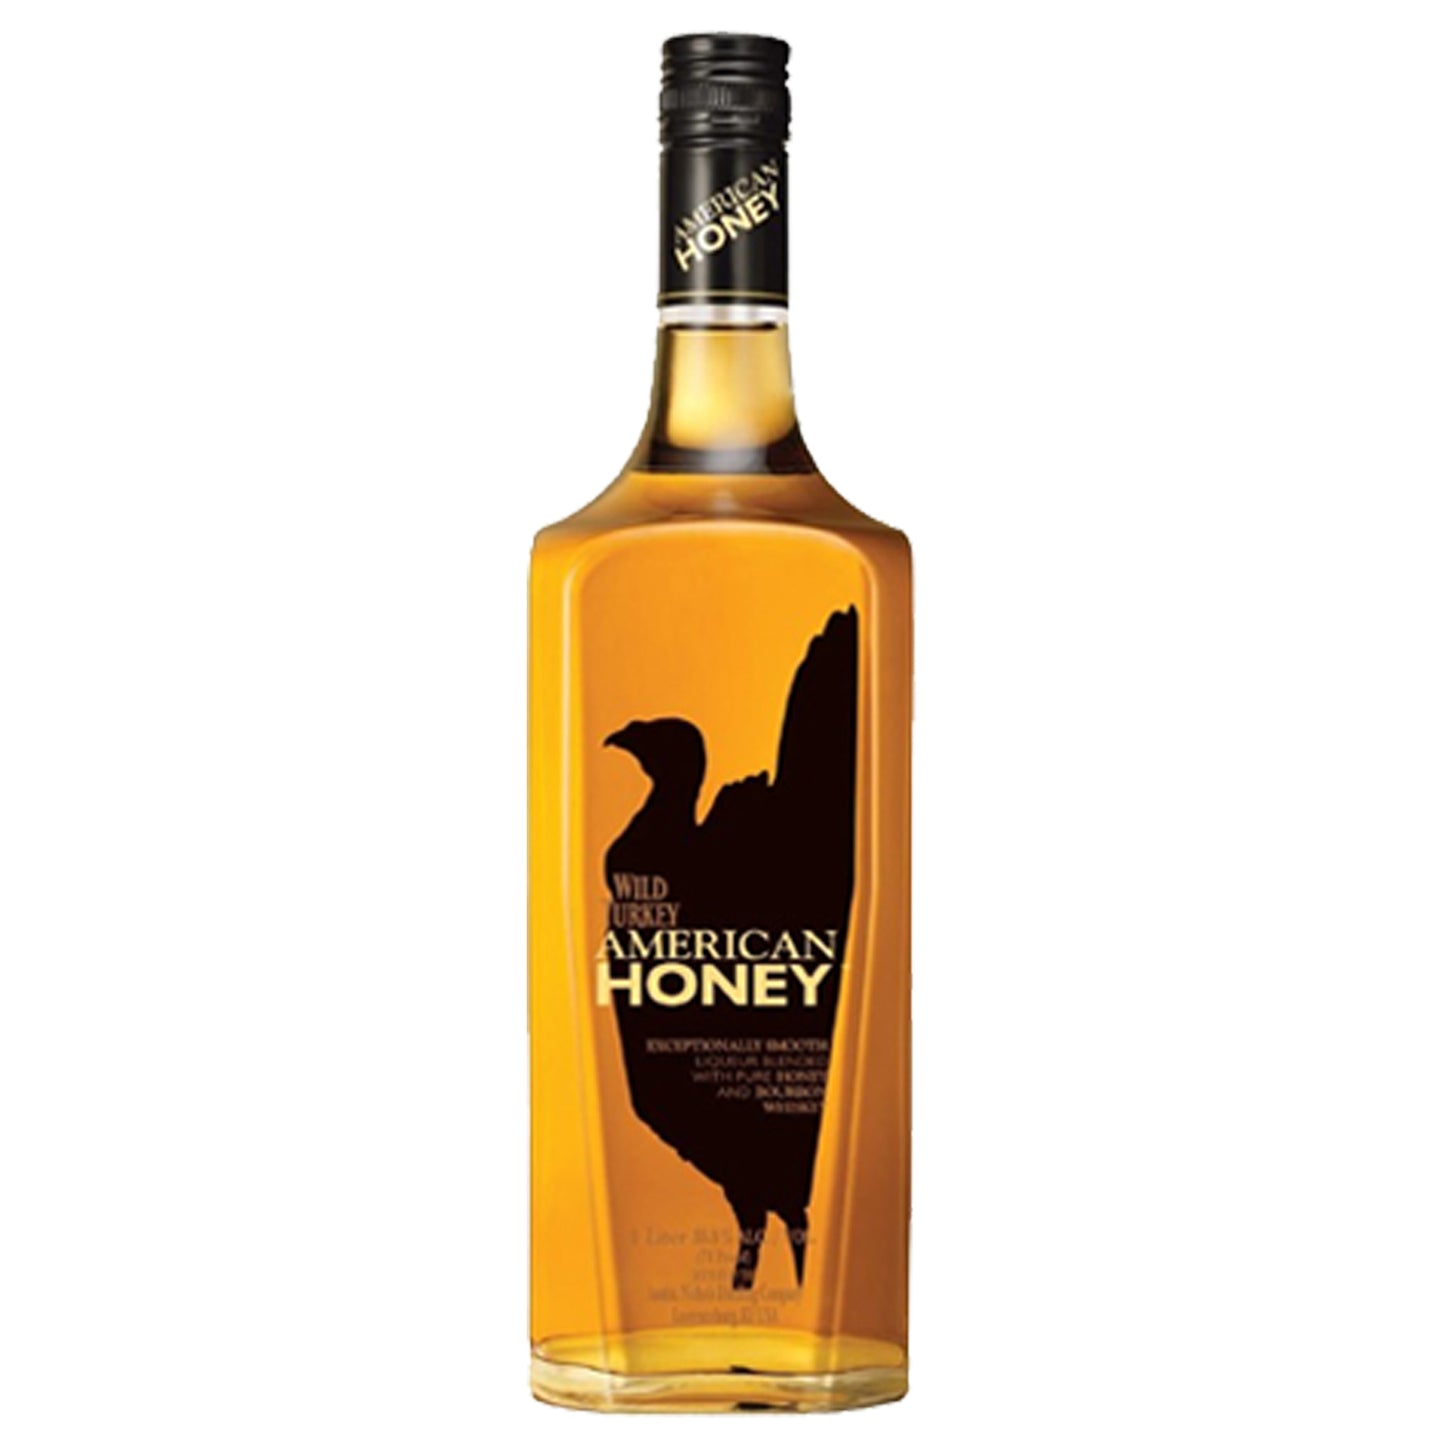 Wild Turkey Bourbon Whiskey American  Honey. 1 L